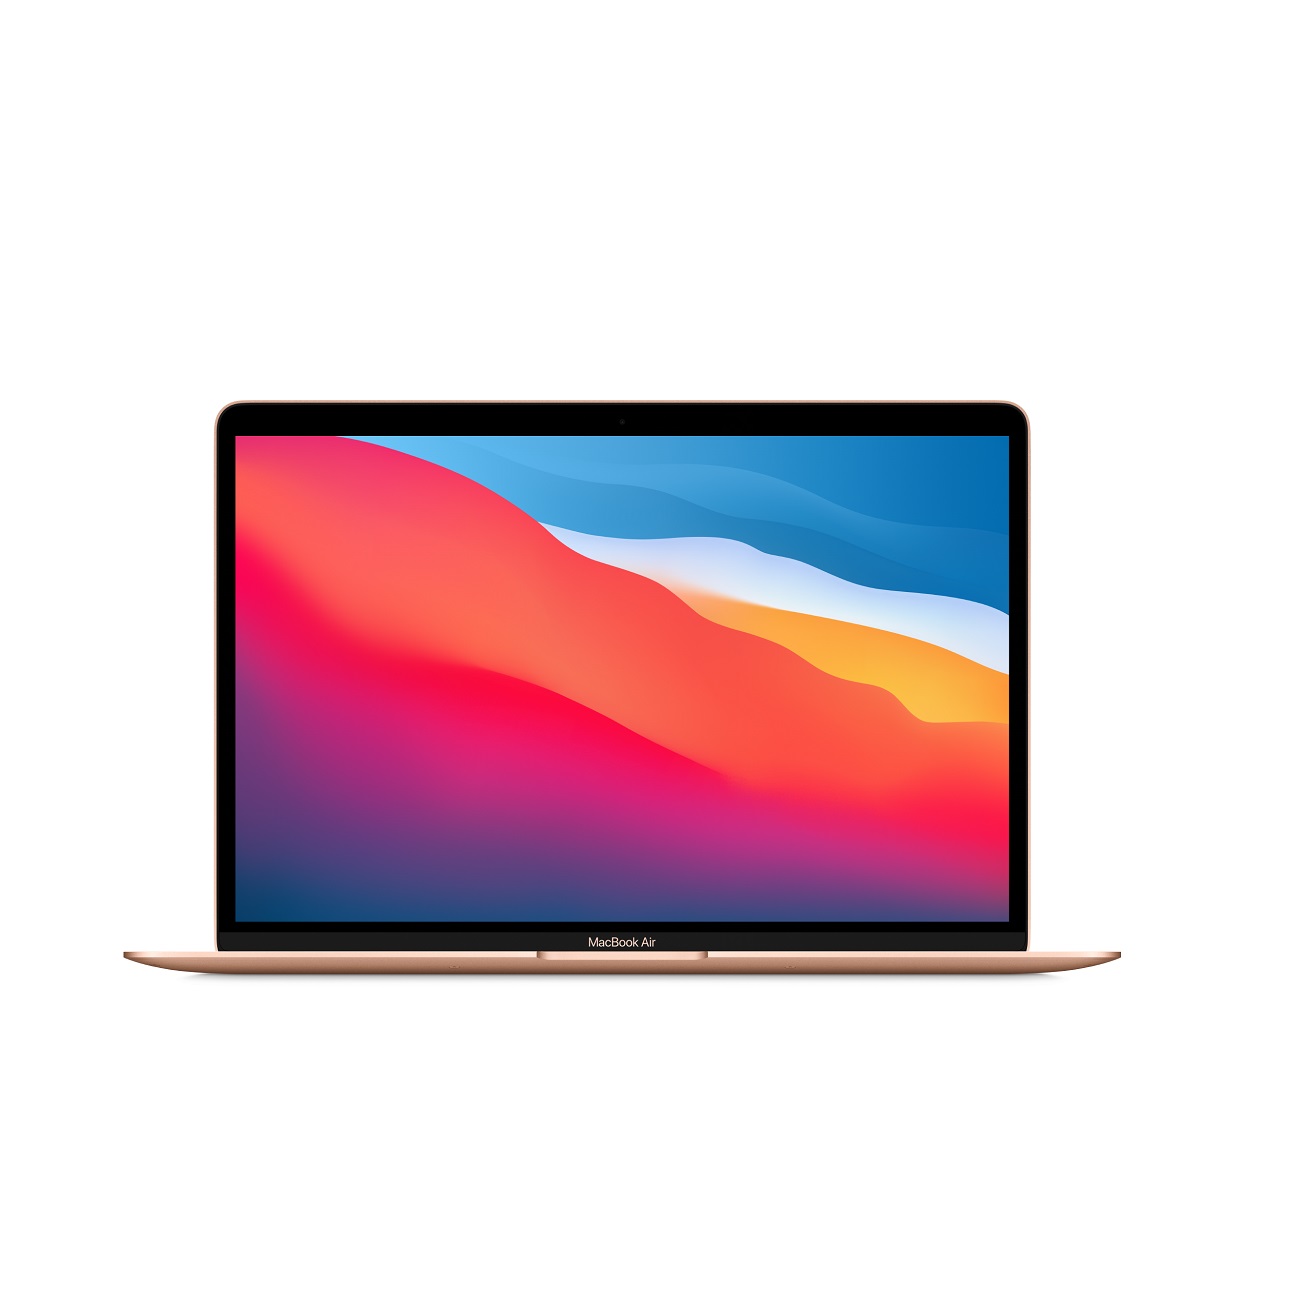 macbook air 2017 lazada